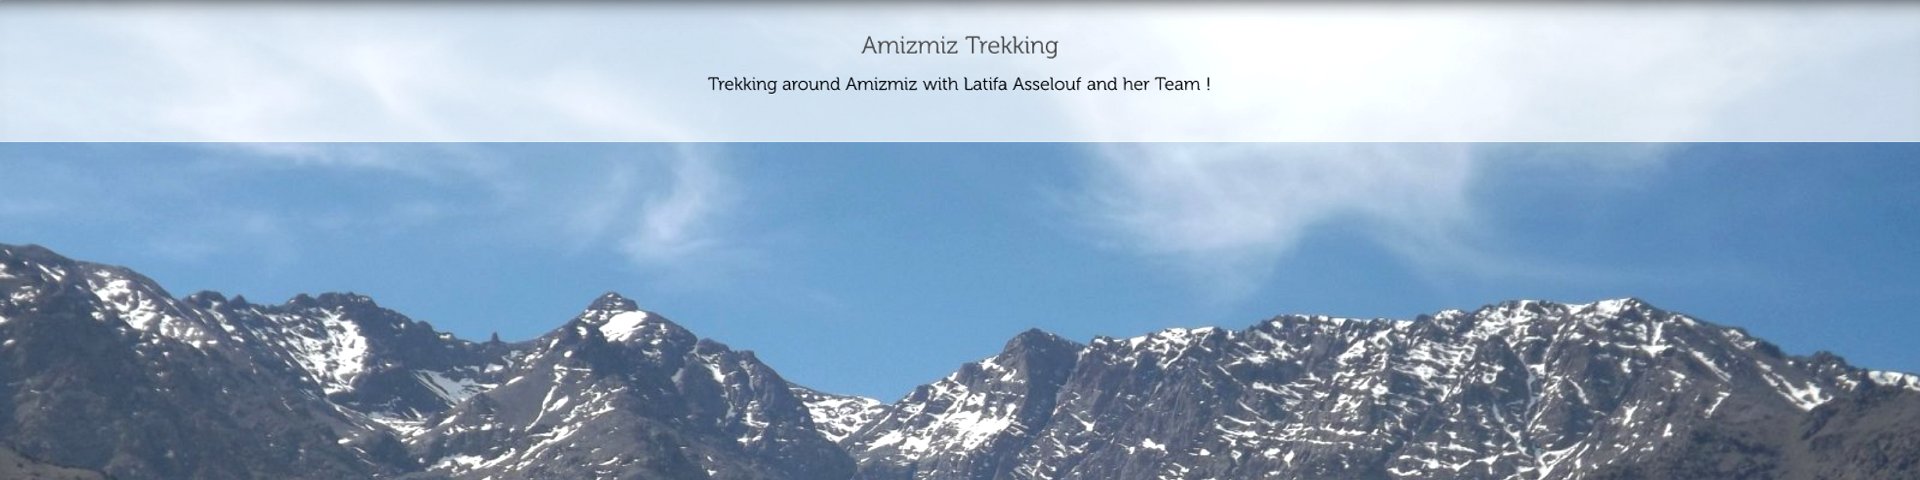 Amizmiz Trekking